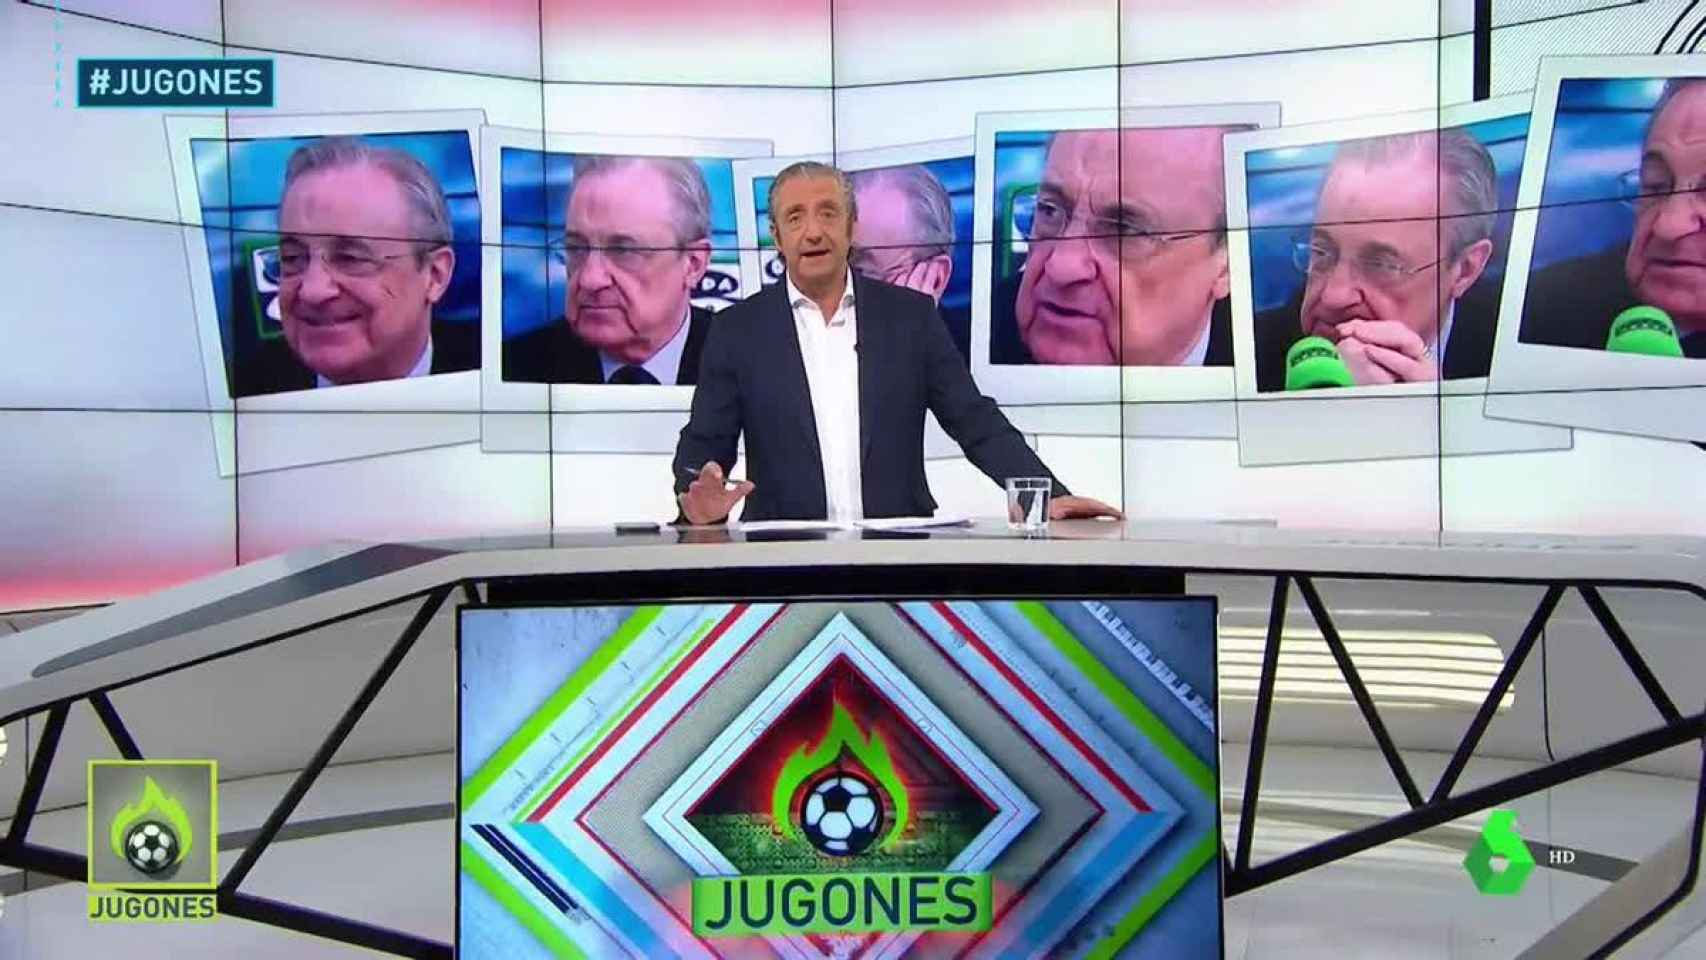 Imagen de Josep Pedrerol presentando el programa Jugones / TWITTER @ELCHIRINGUITOTV